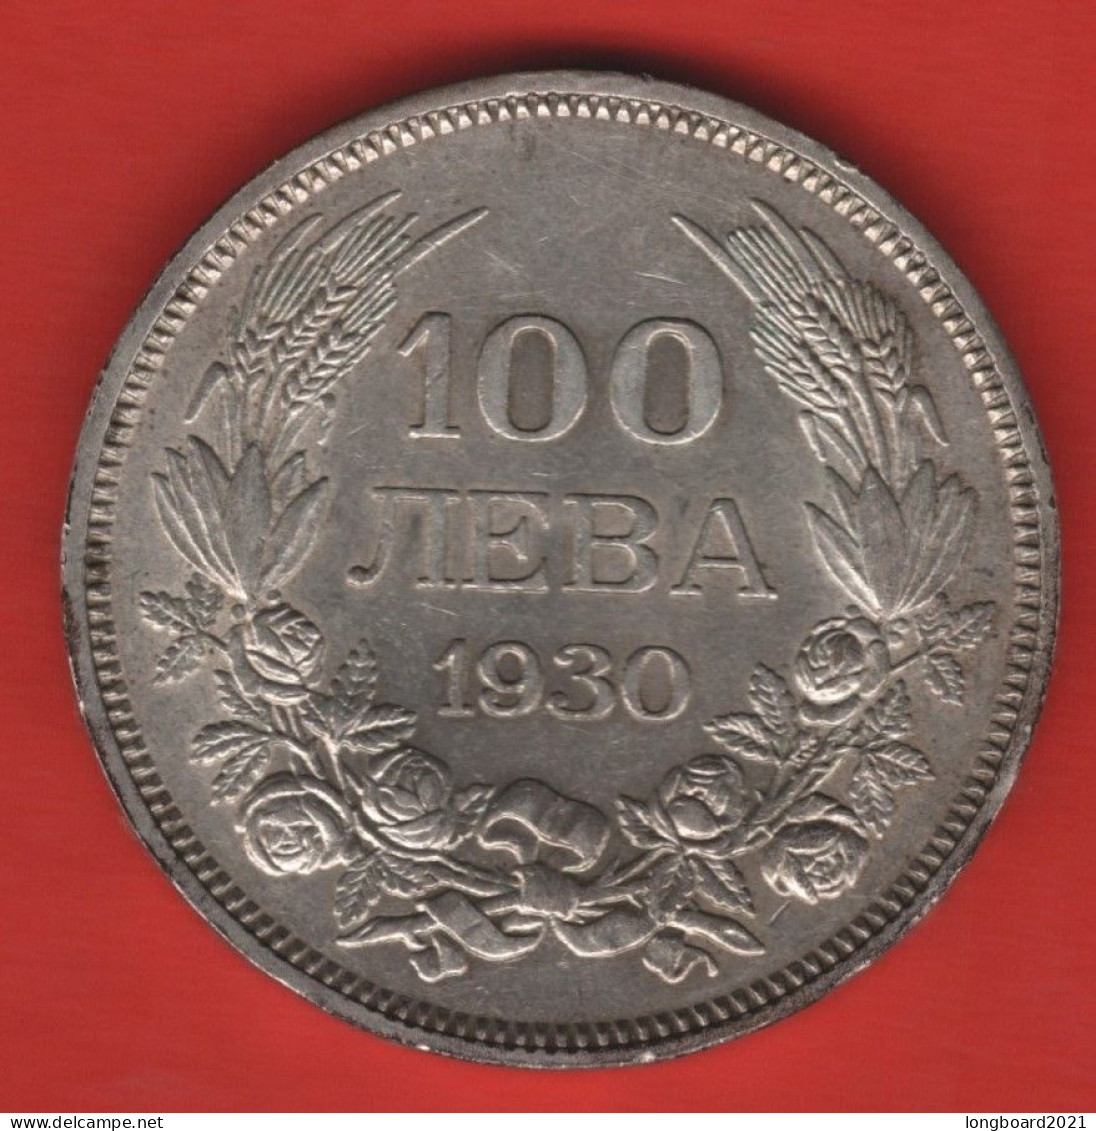 BULGARIA - 100 LEW 1930 -SILVER- - Bulgarien